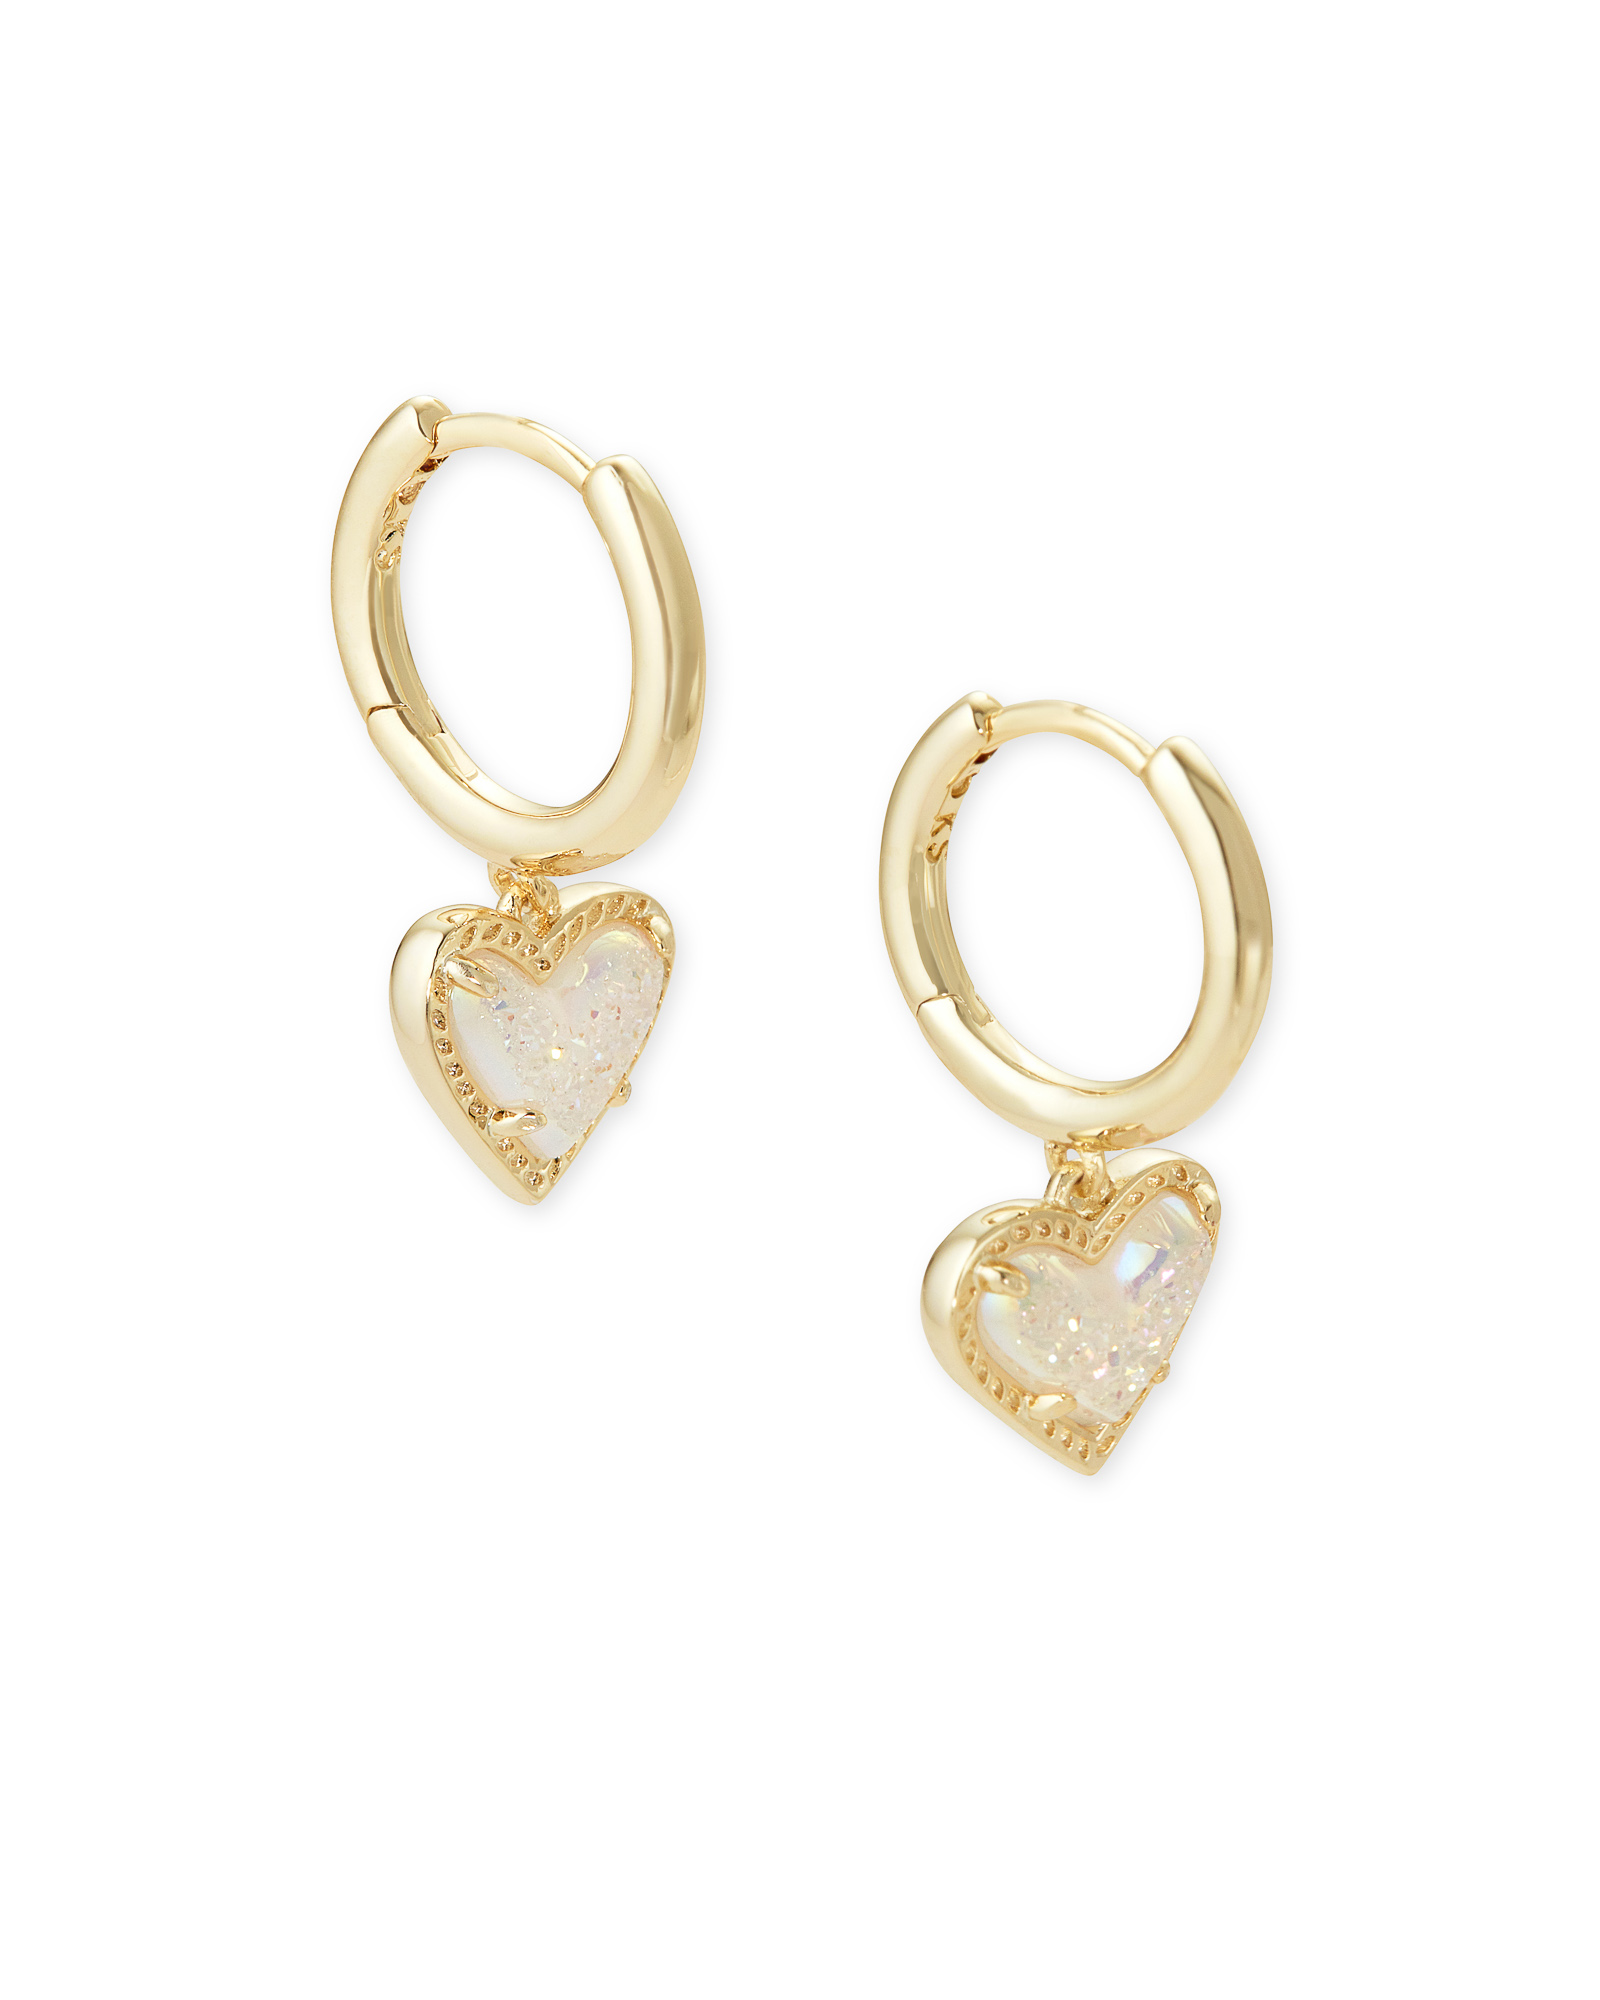 Ari Heart Gold Huggie Earrings in Iridescent Drusy | Kendra Scott